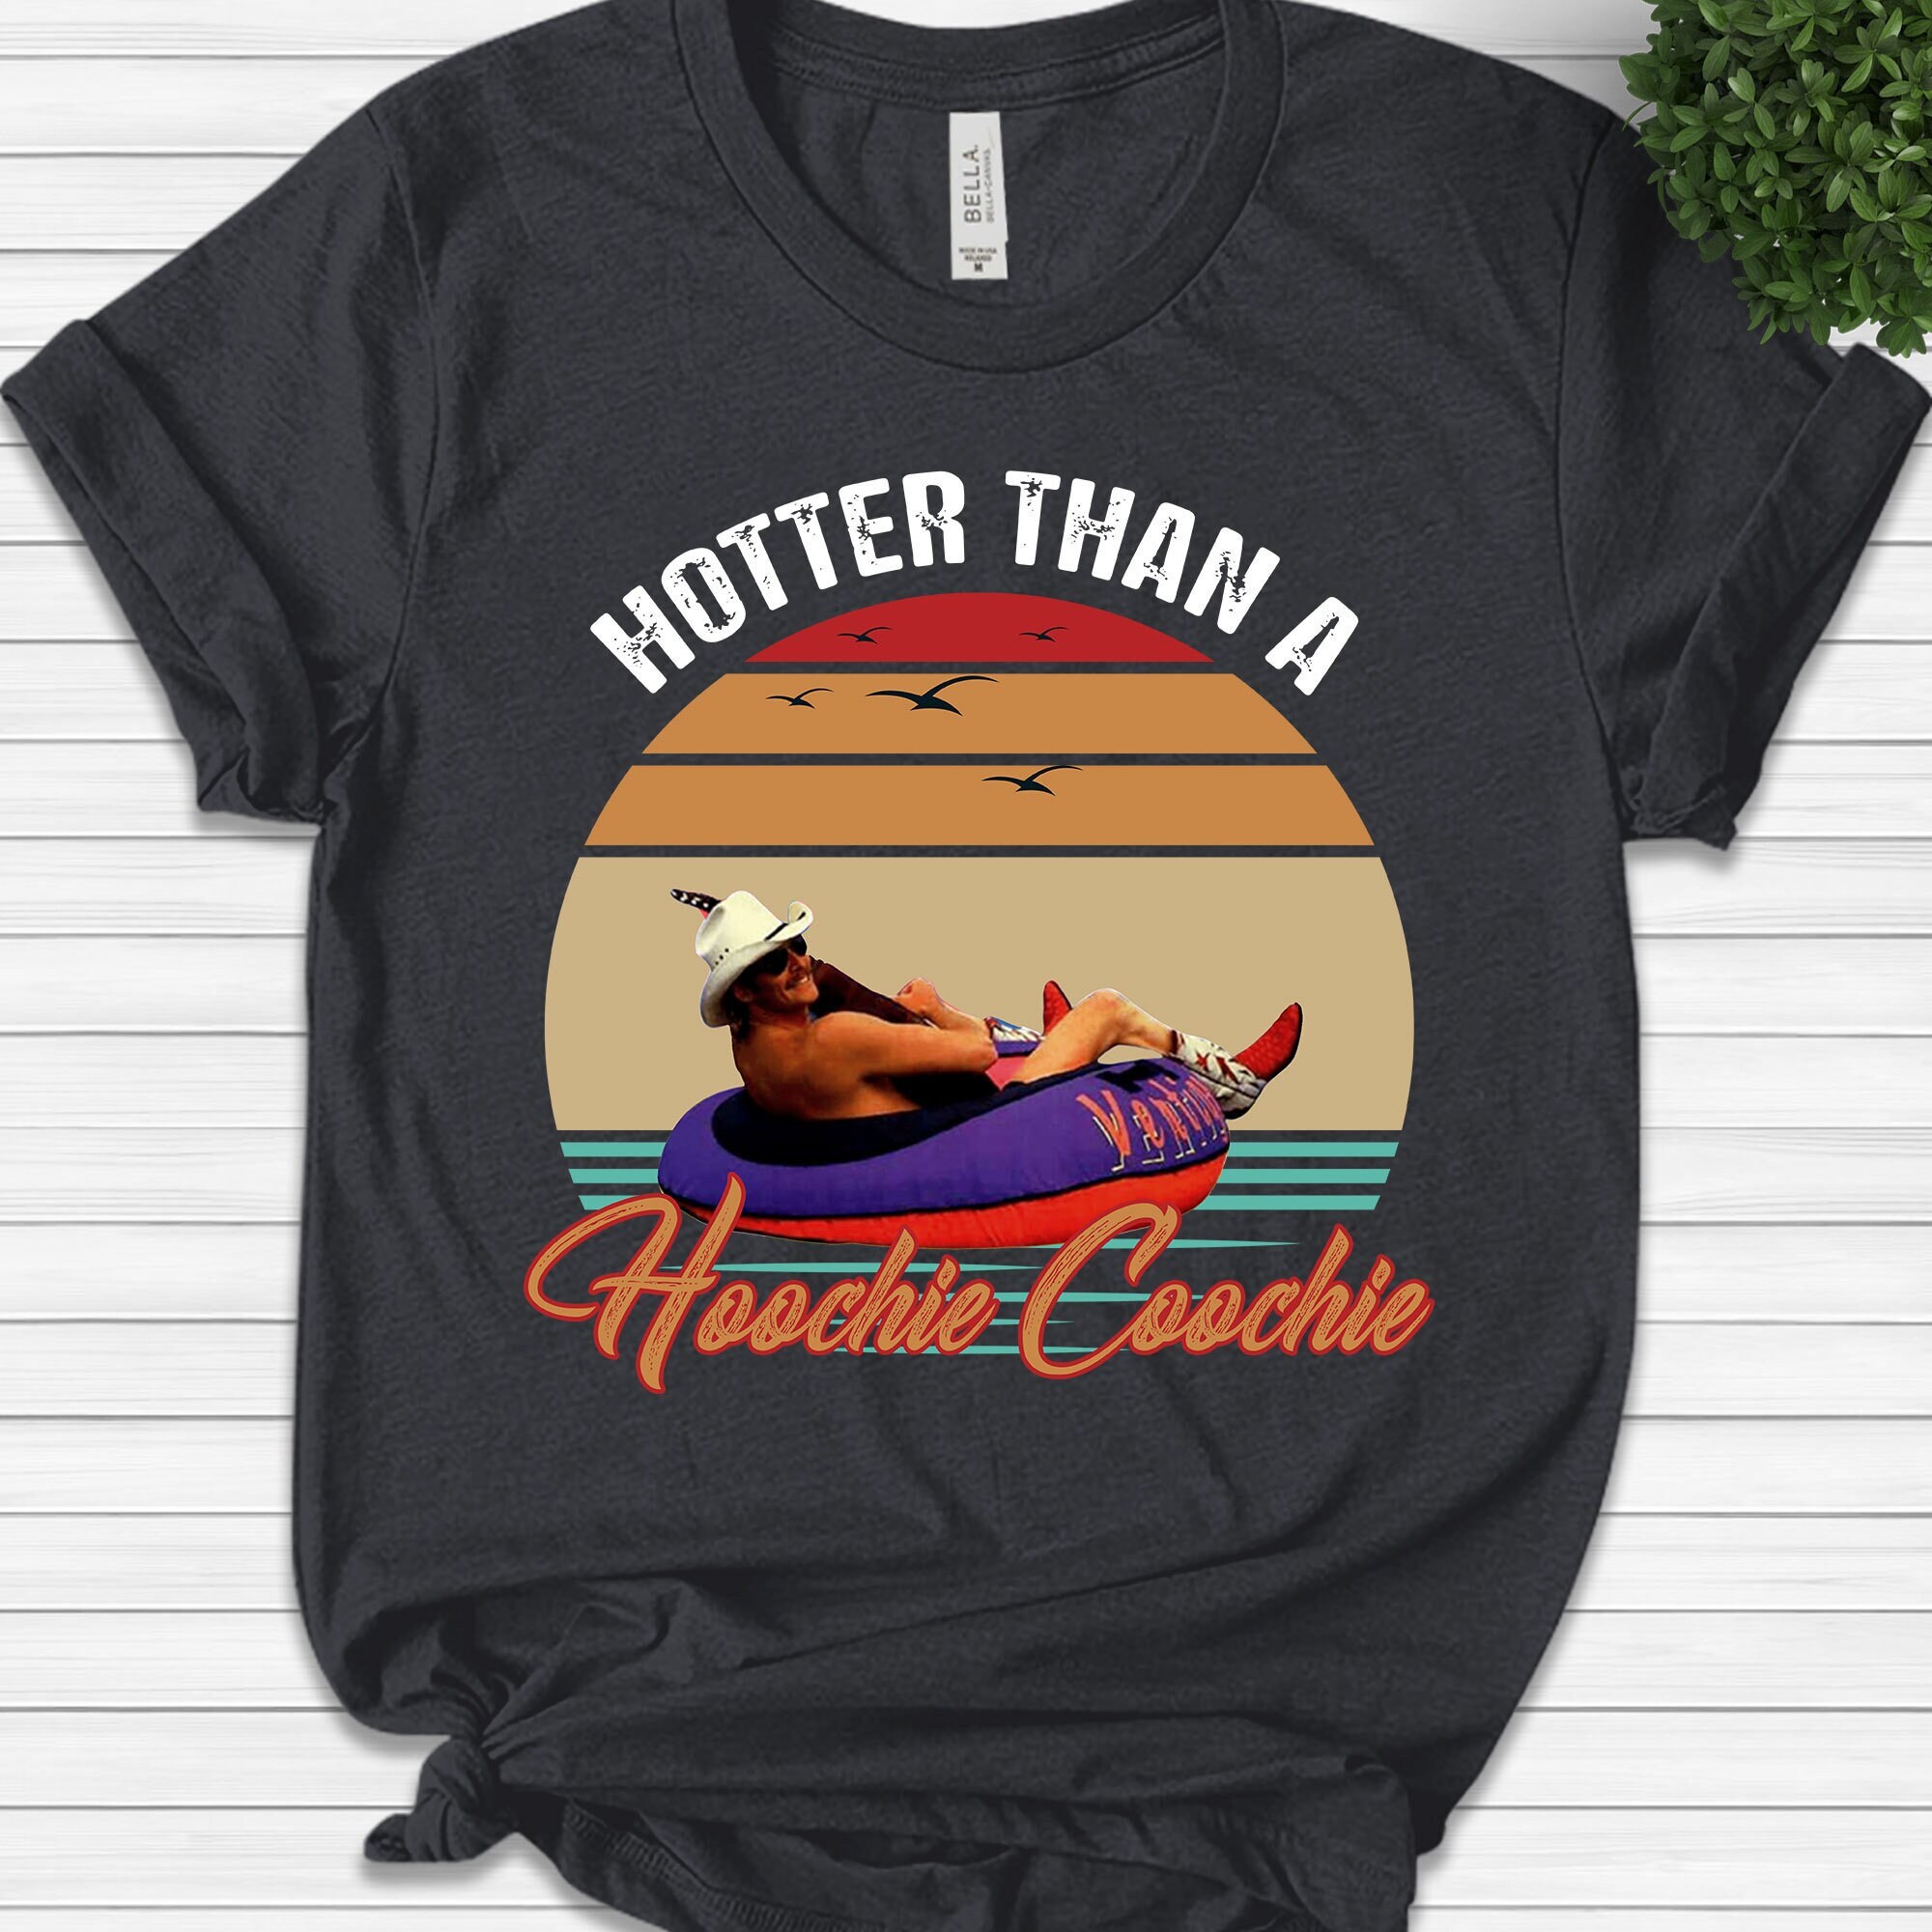 Discover Hotter than a Hoochie Choochie Vintage T-Shirt, Alan Jackson Shirt